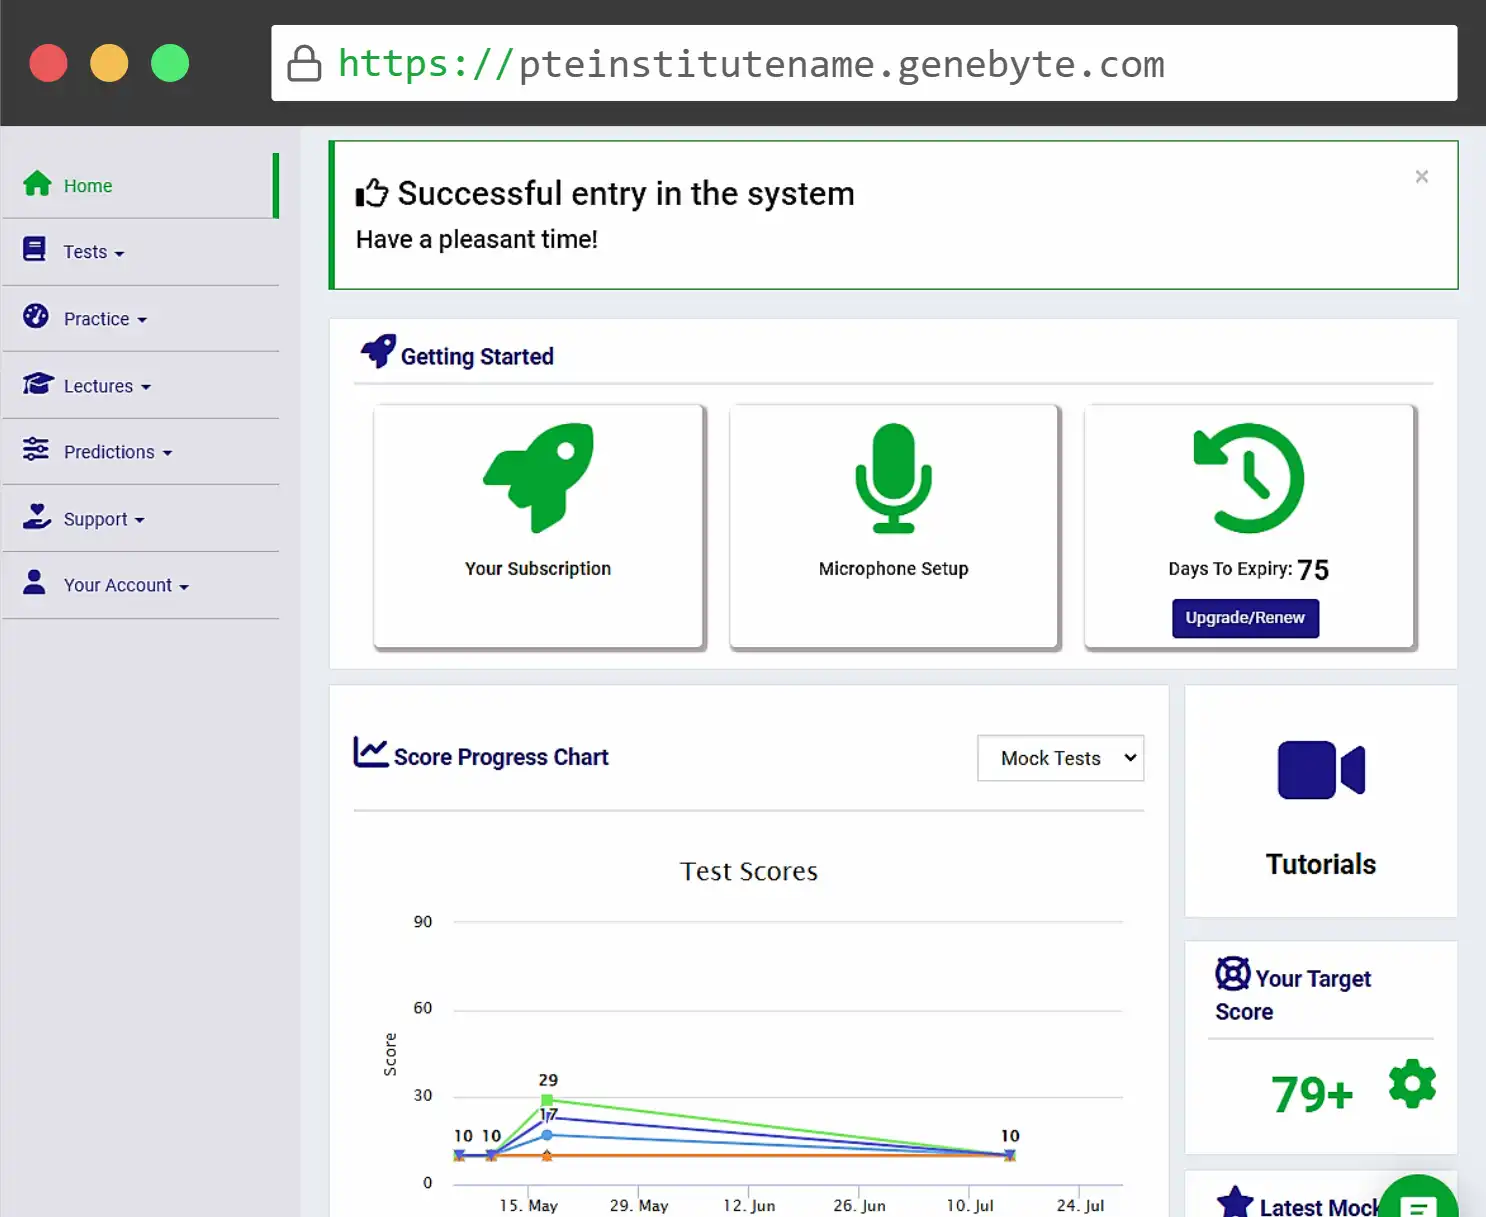 Snapshot of Genebyte's customizable PTE Academic software interface.